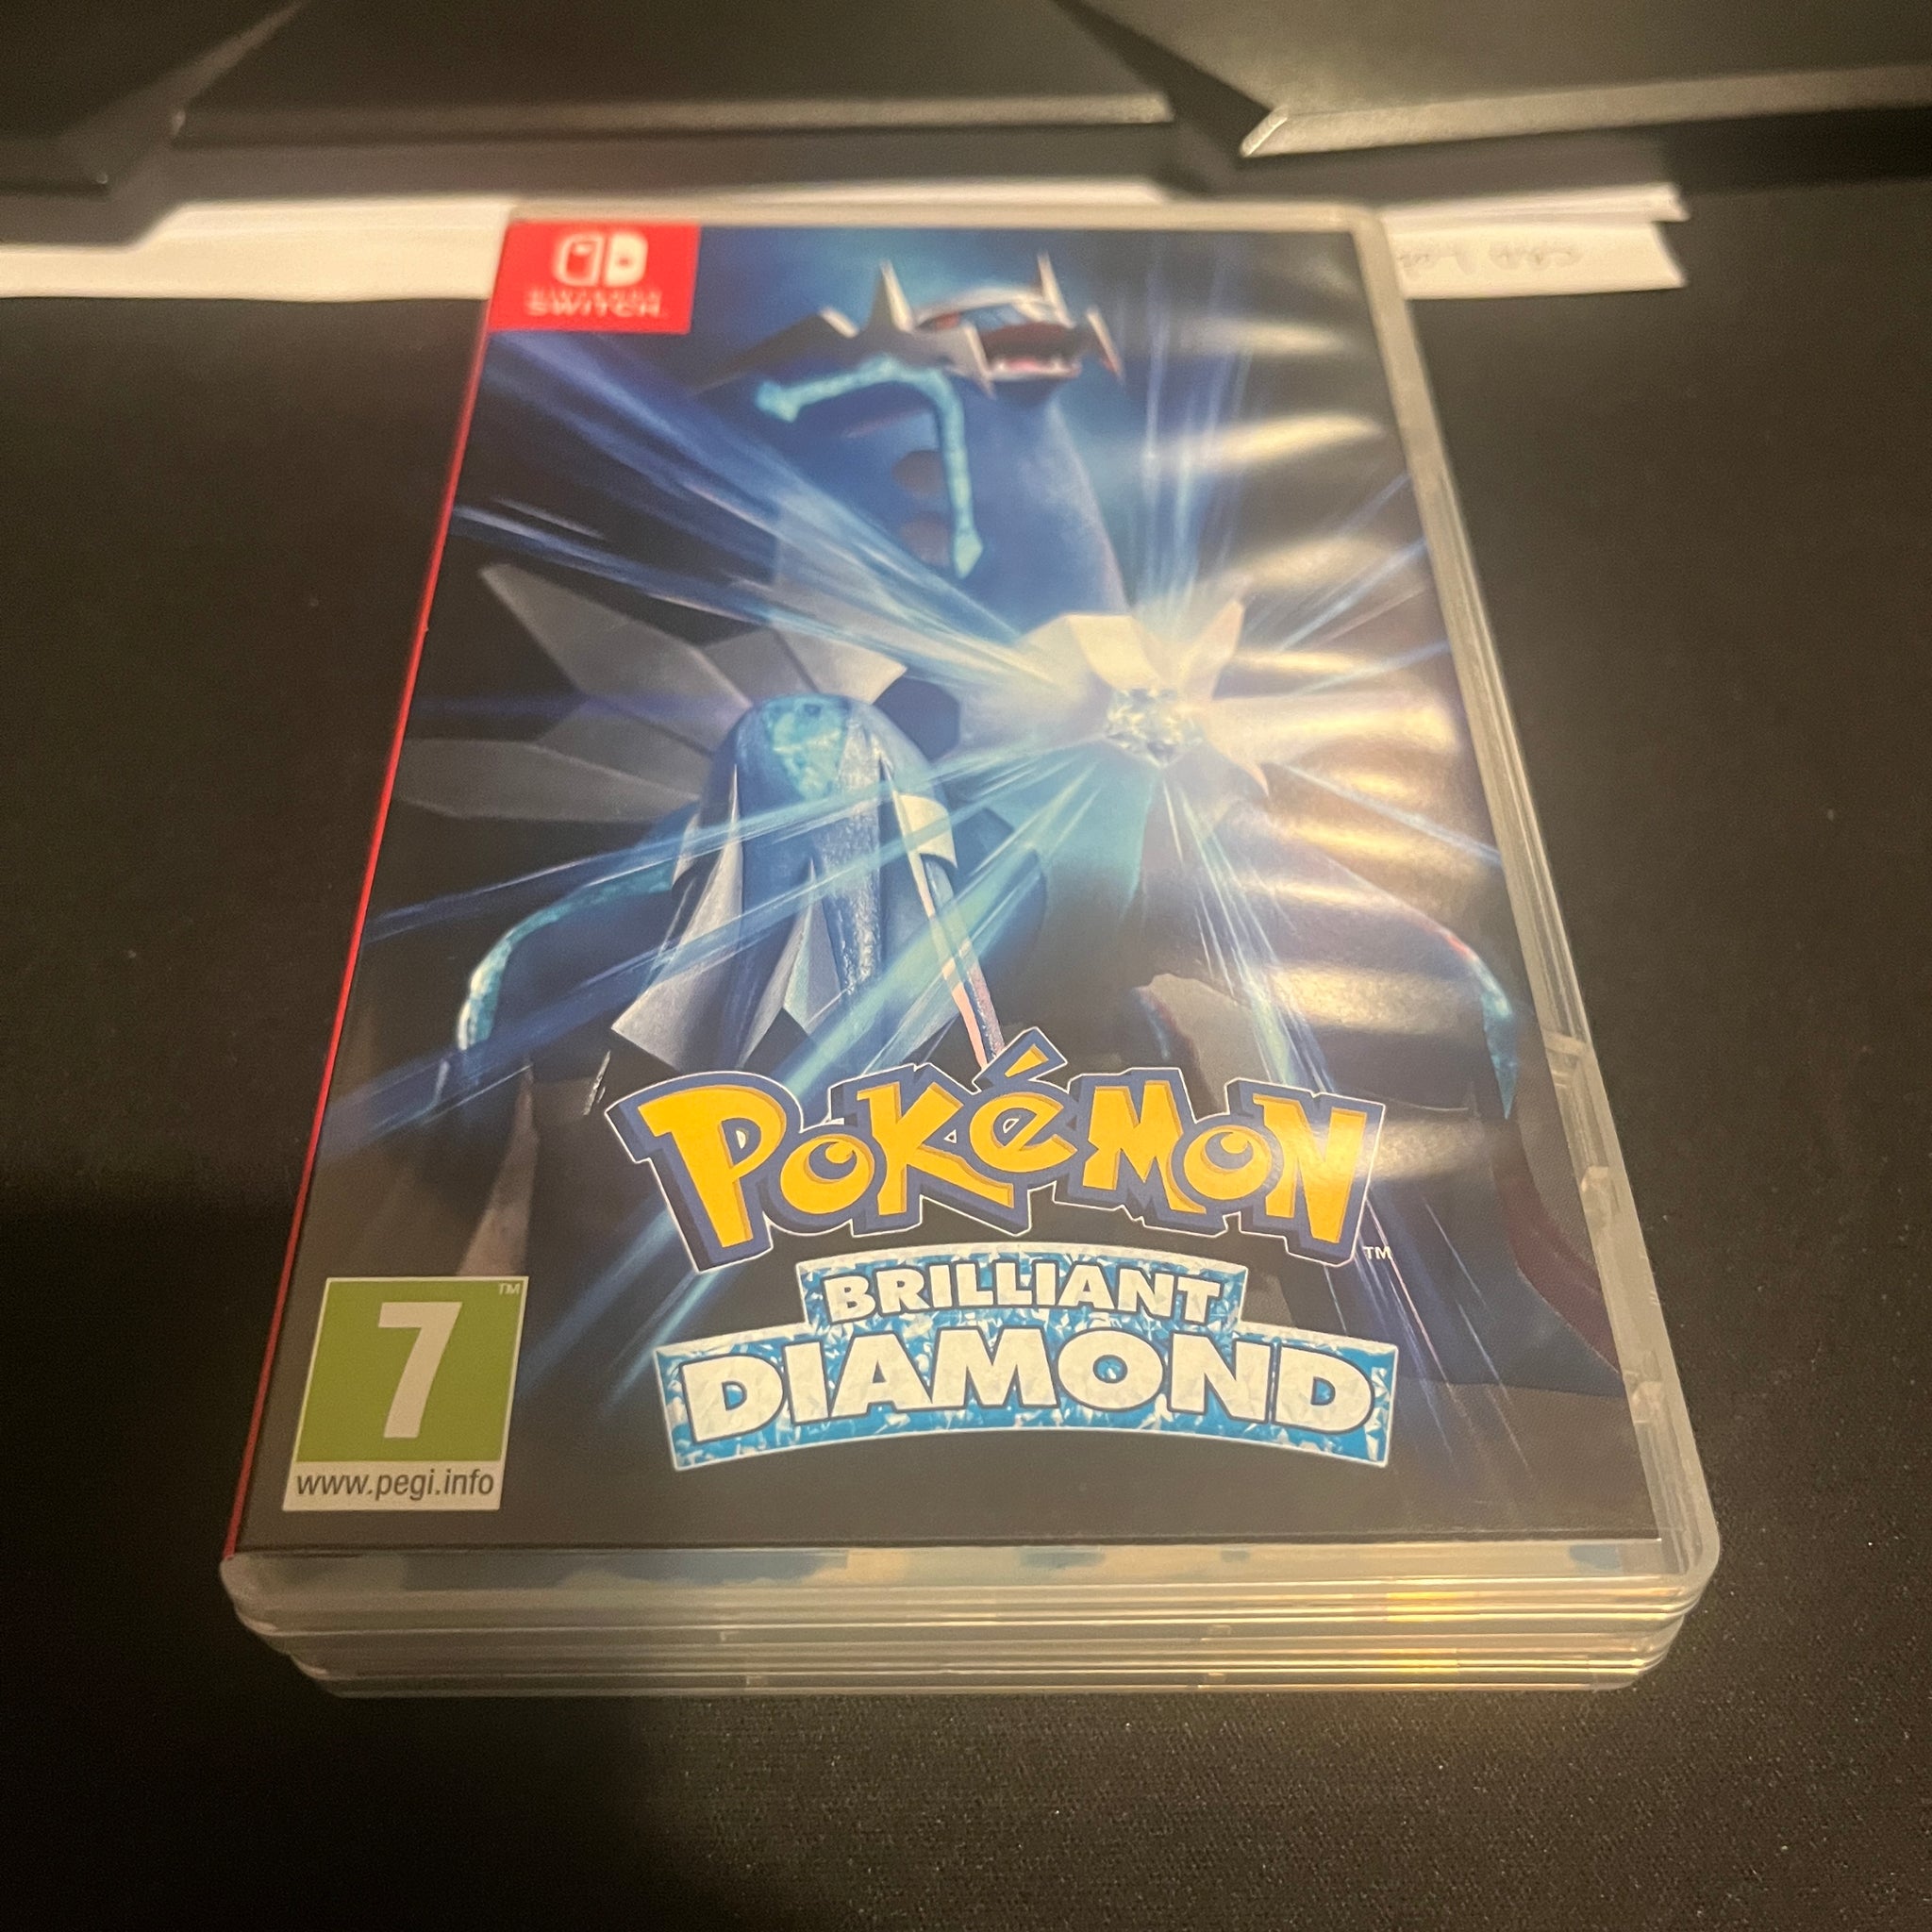 Pokémon Brilliant Diamond - Nintendo Switch - Games - Nintendo